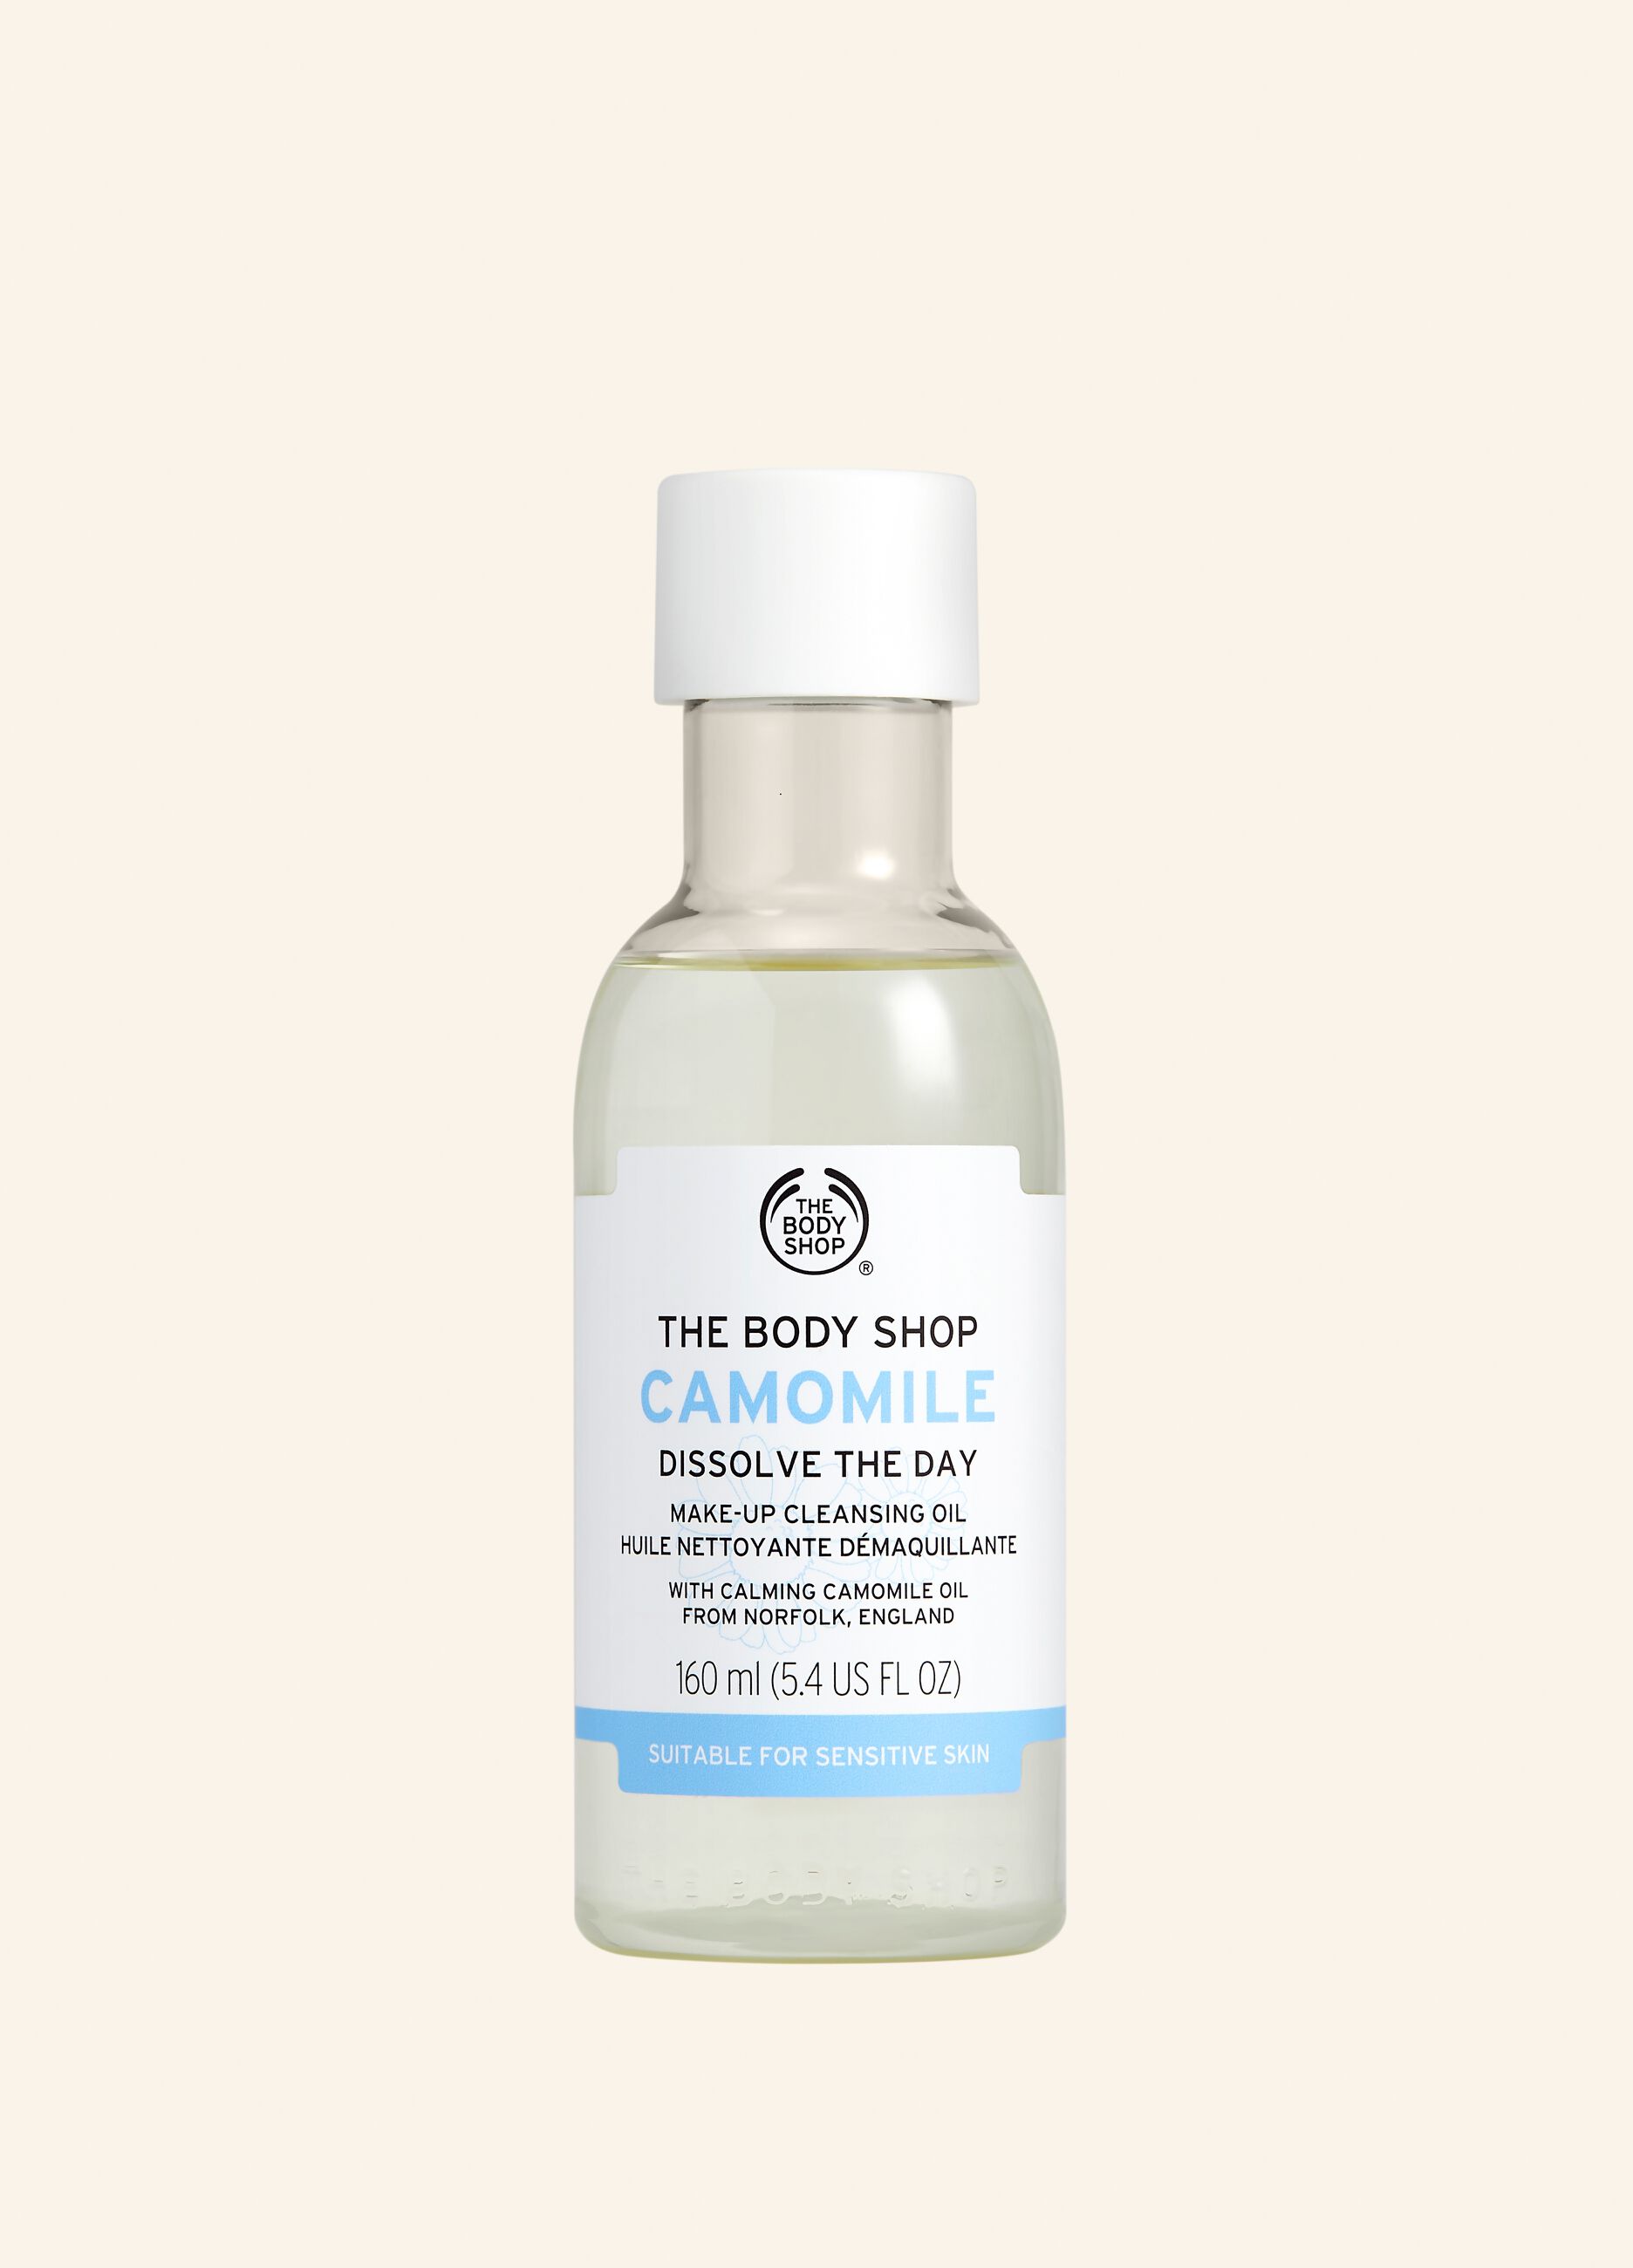 The Body Shop chamomile make-up remover oil 160ml